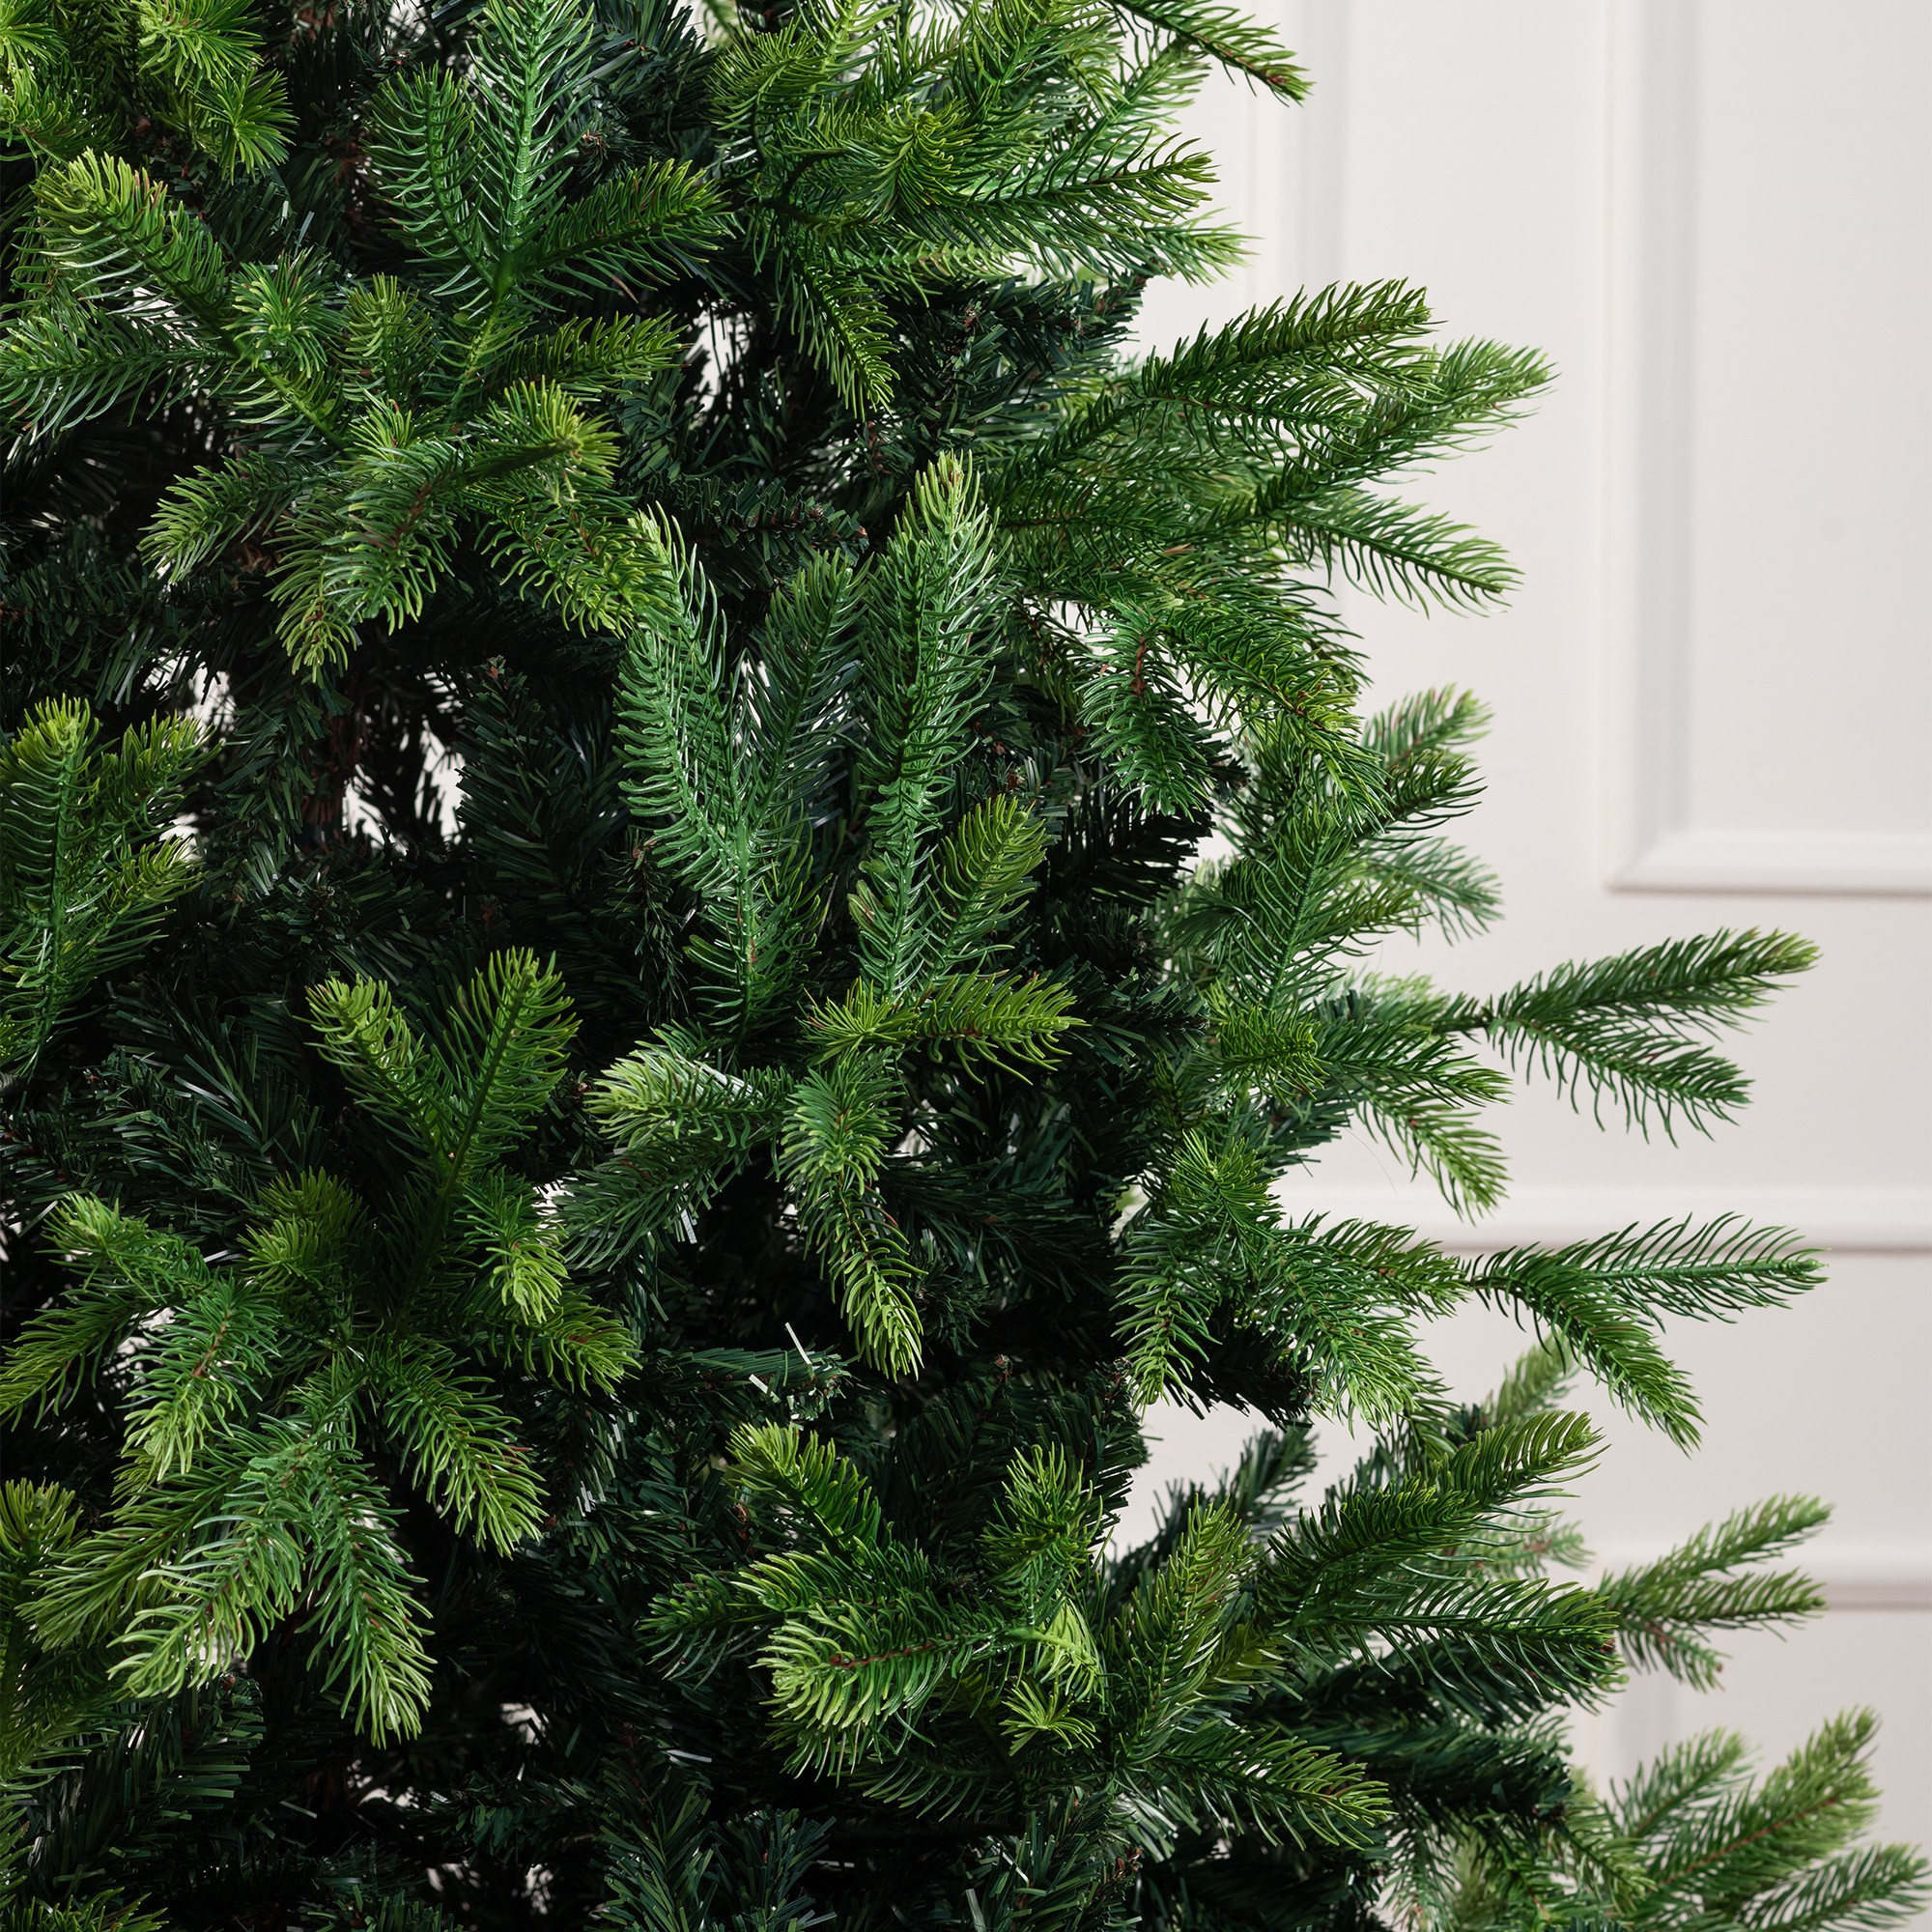 Grand sapin de Noël Eco Home avec sac 240 cm GREEN